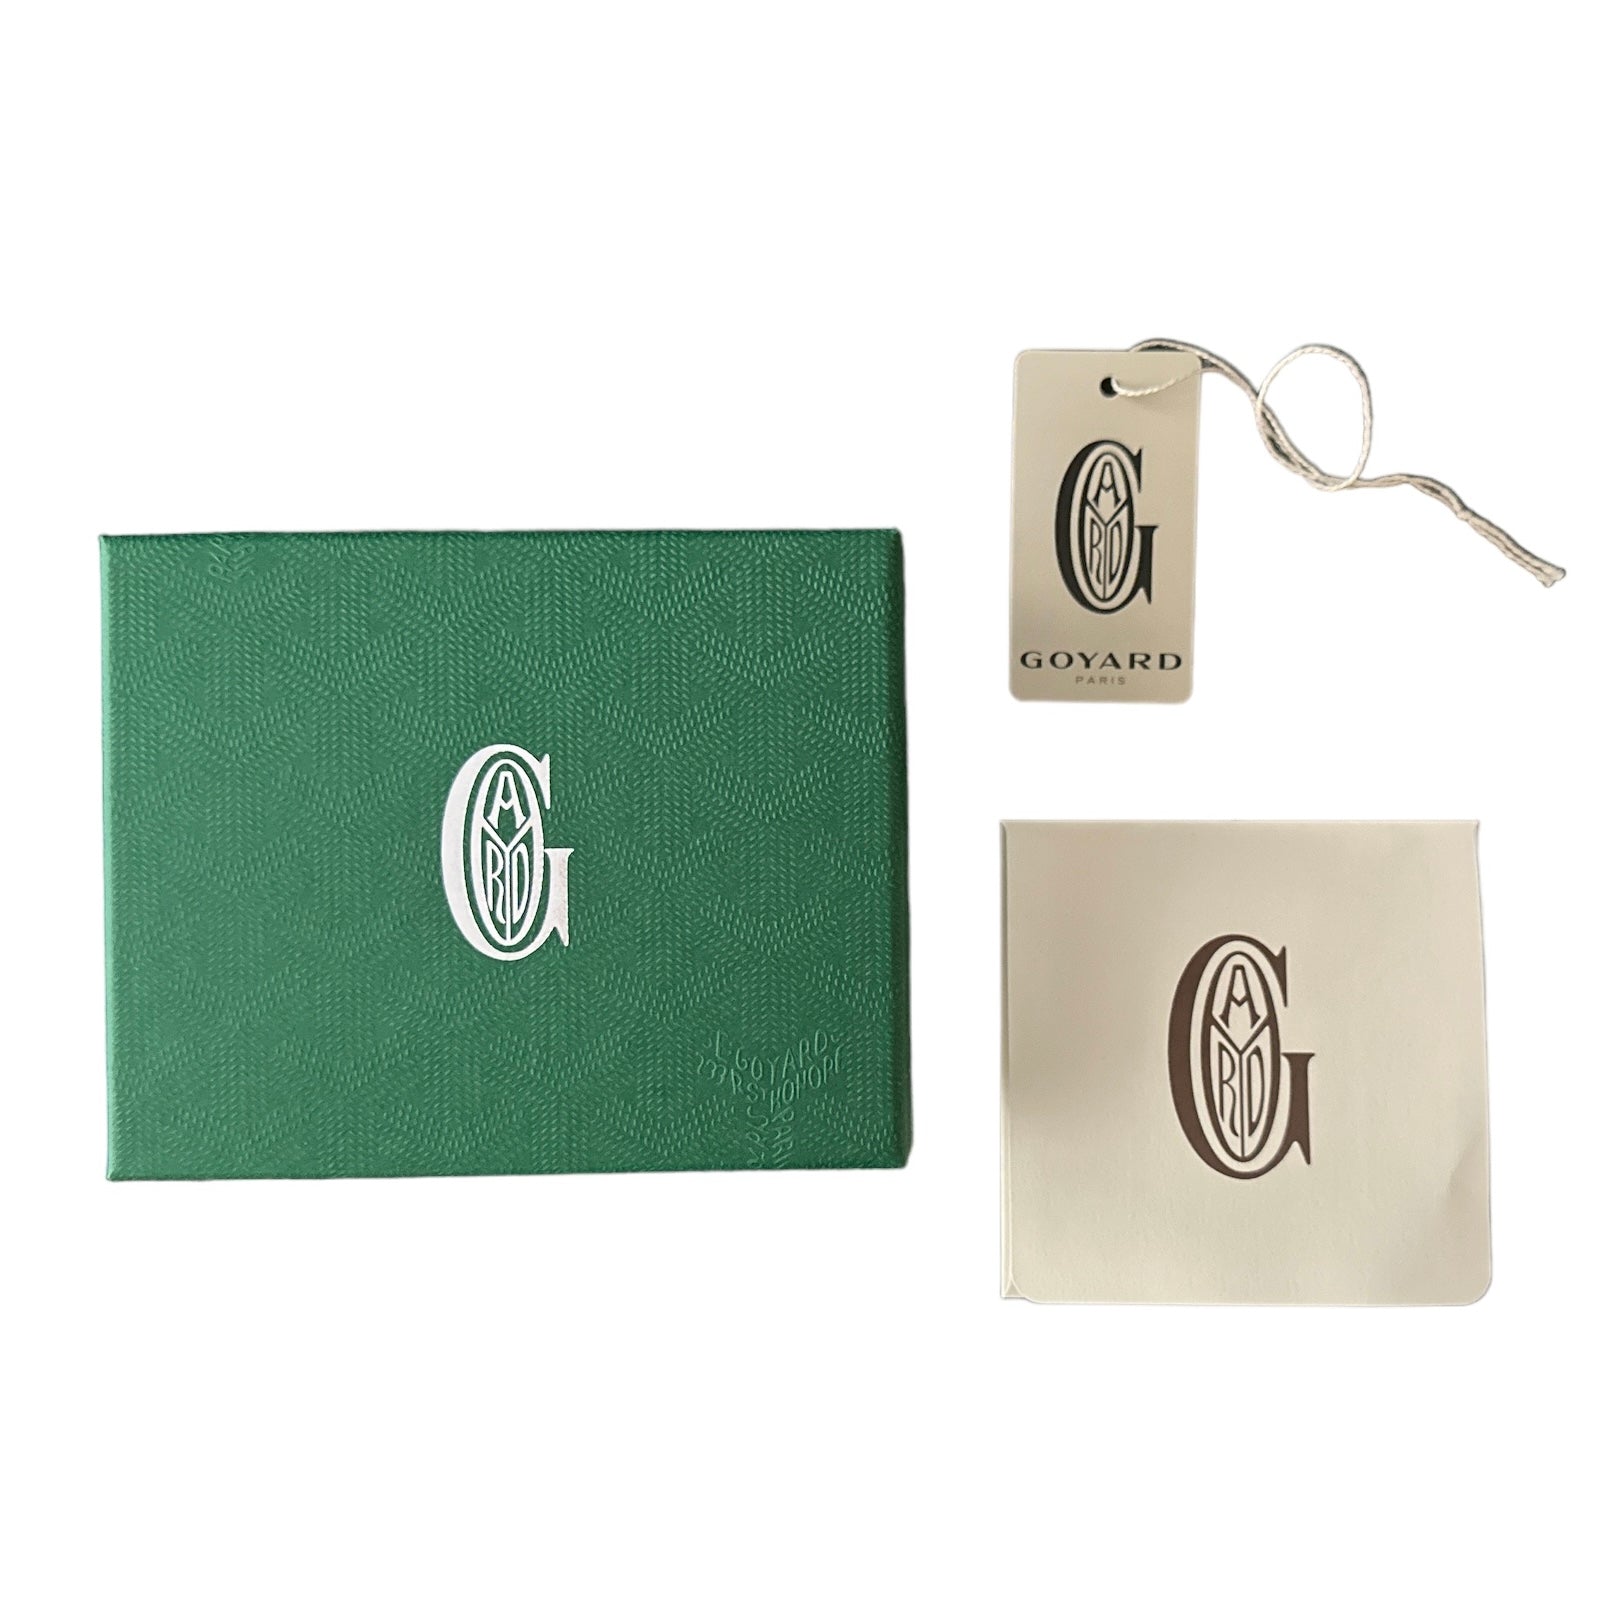 goyard saint pierre card holder green